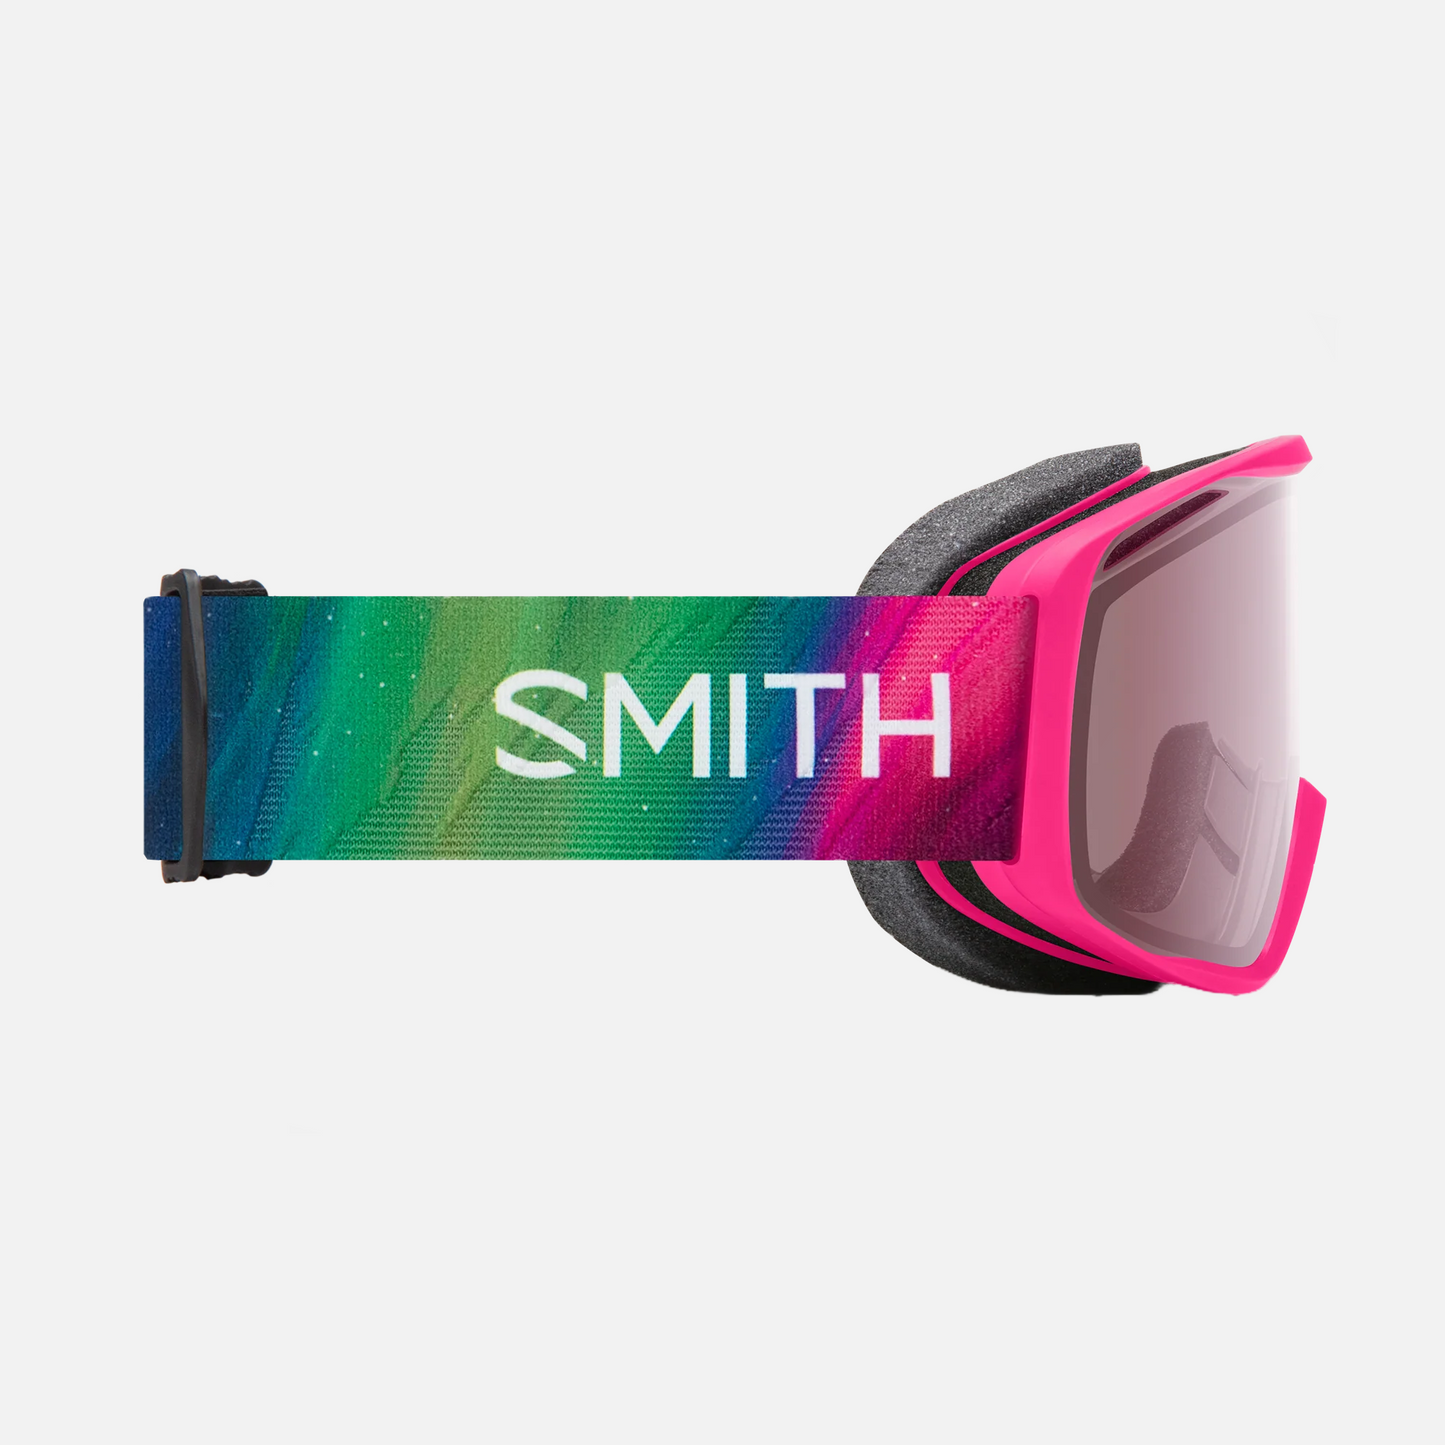 SMITH Rally Goggle